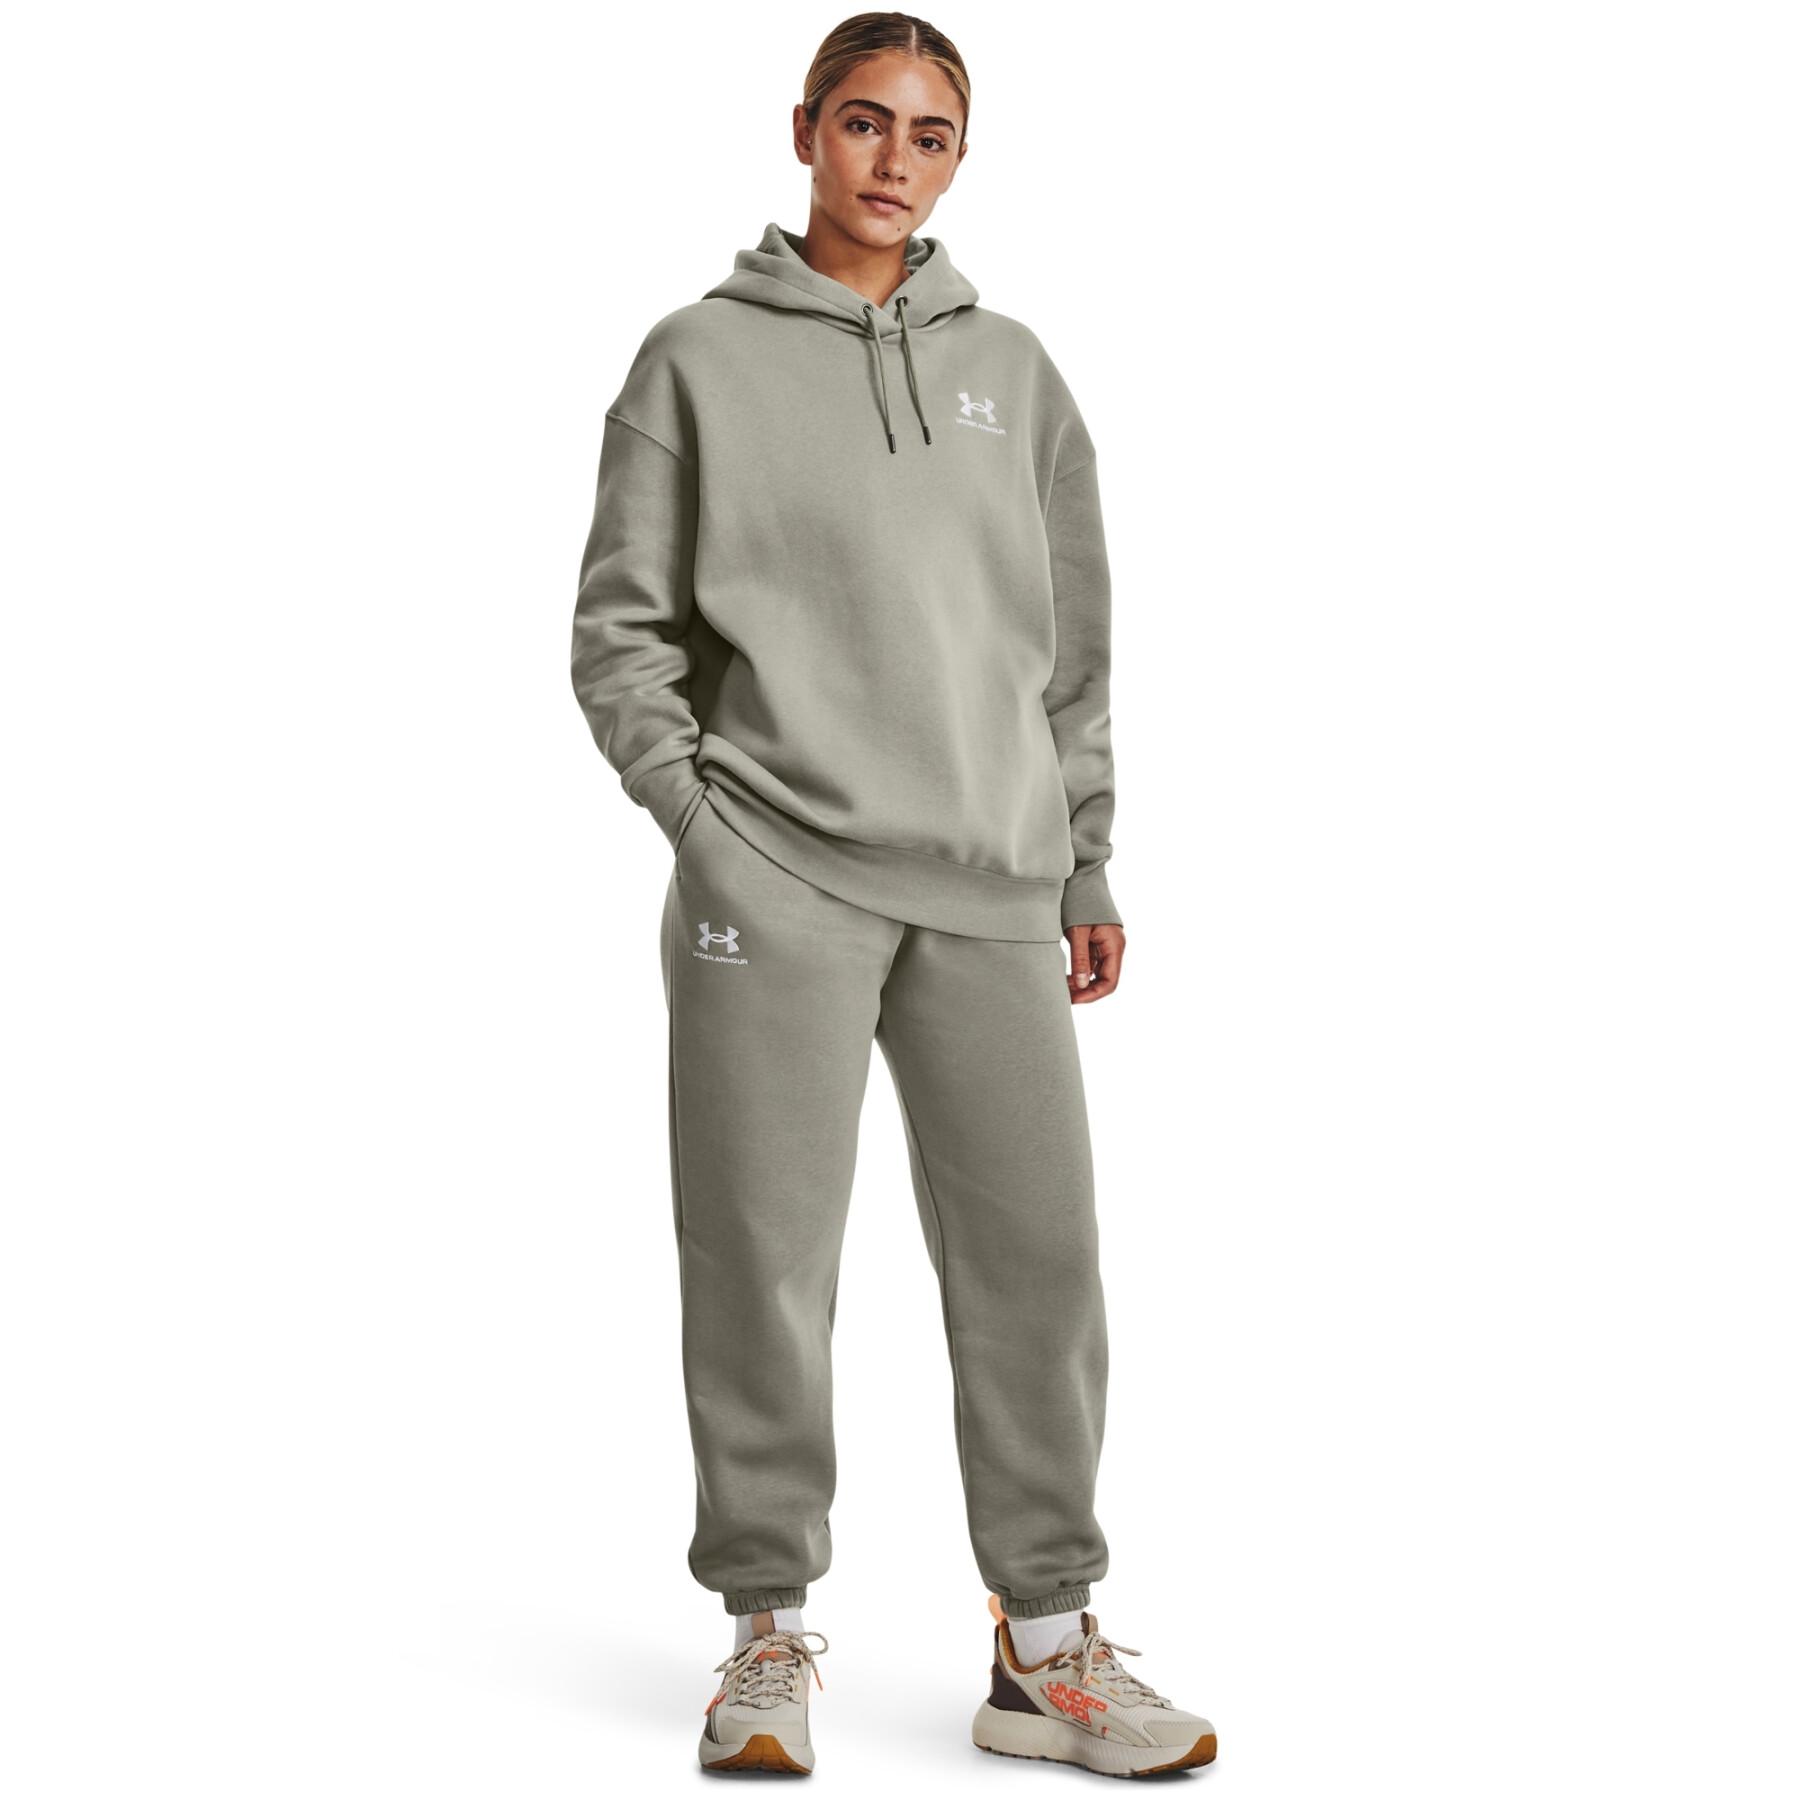 Women's jogging suit Under Armour Essential Fleece